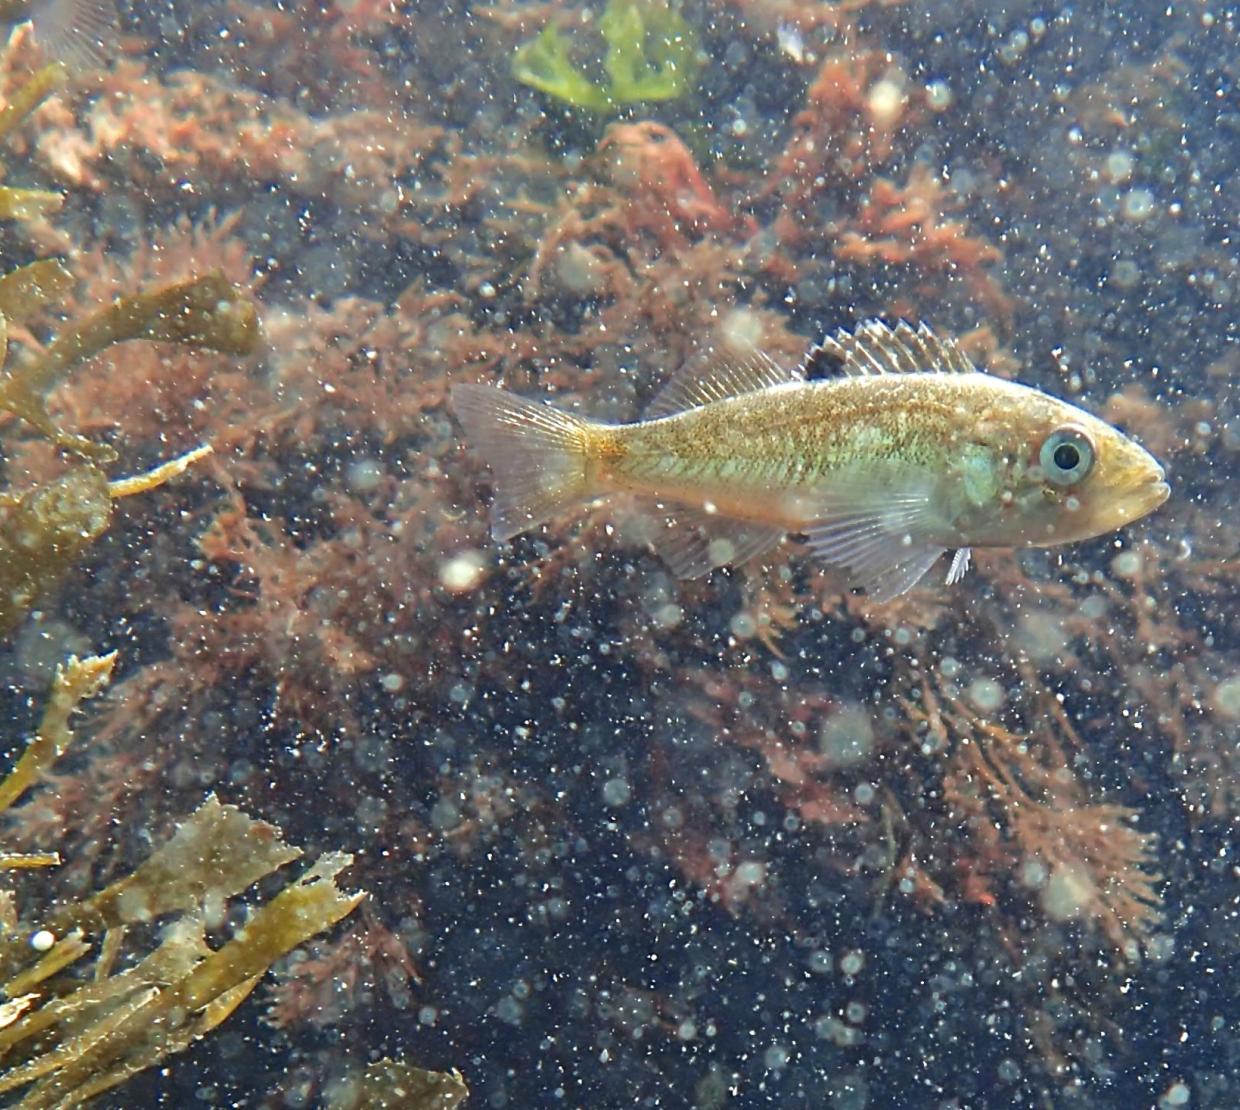 A juvenile blackrock fish